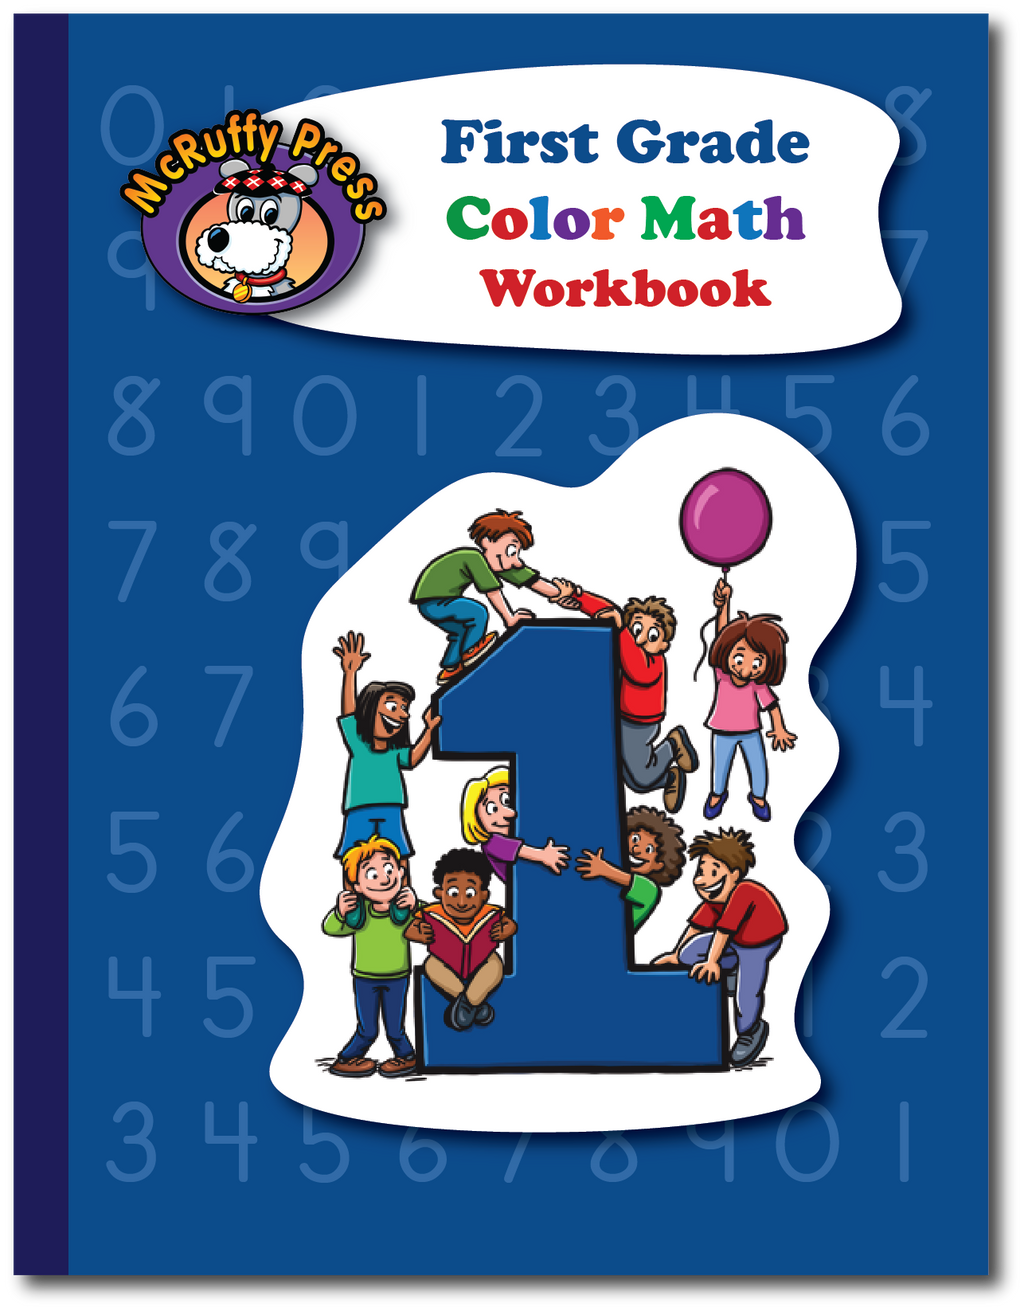 First Grade Color Math Workbook - McRuffy Press